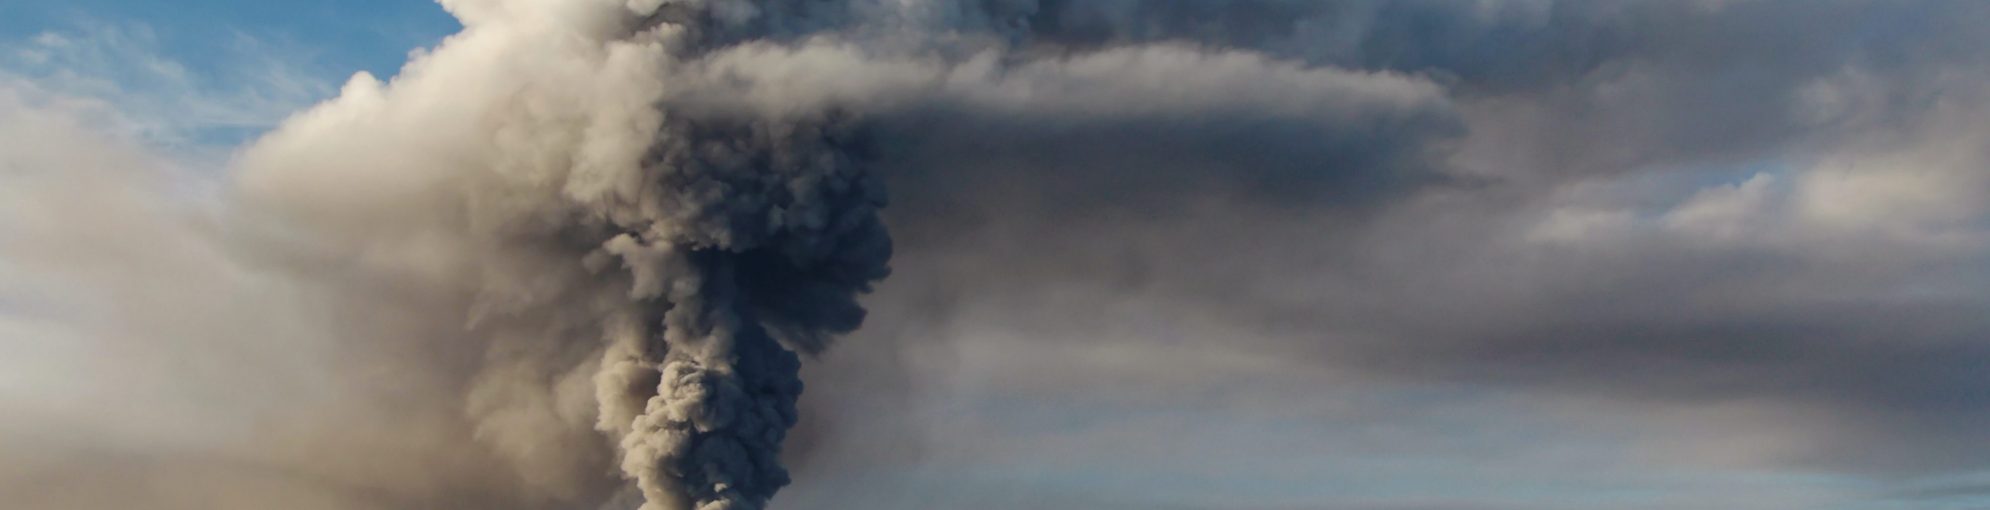 Major eruptions 1919-2019: Celebrating 100 years of IAVCEI